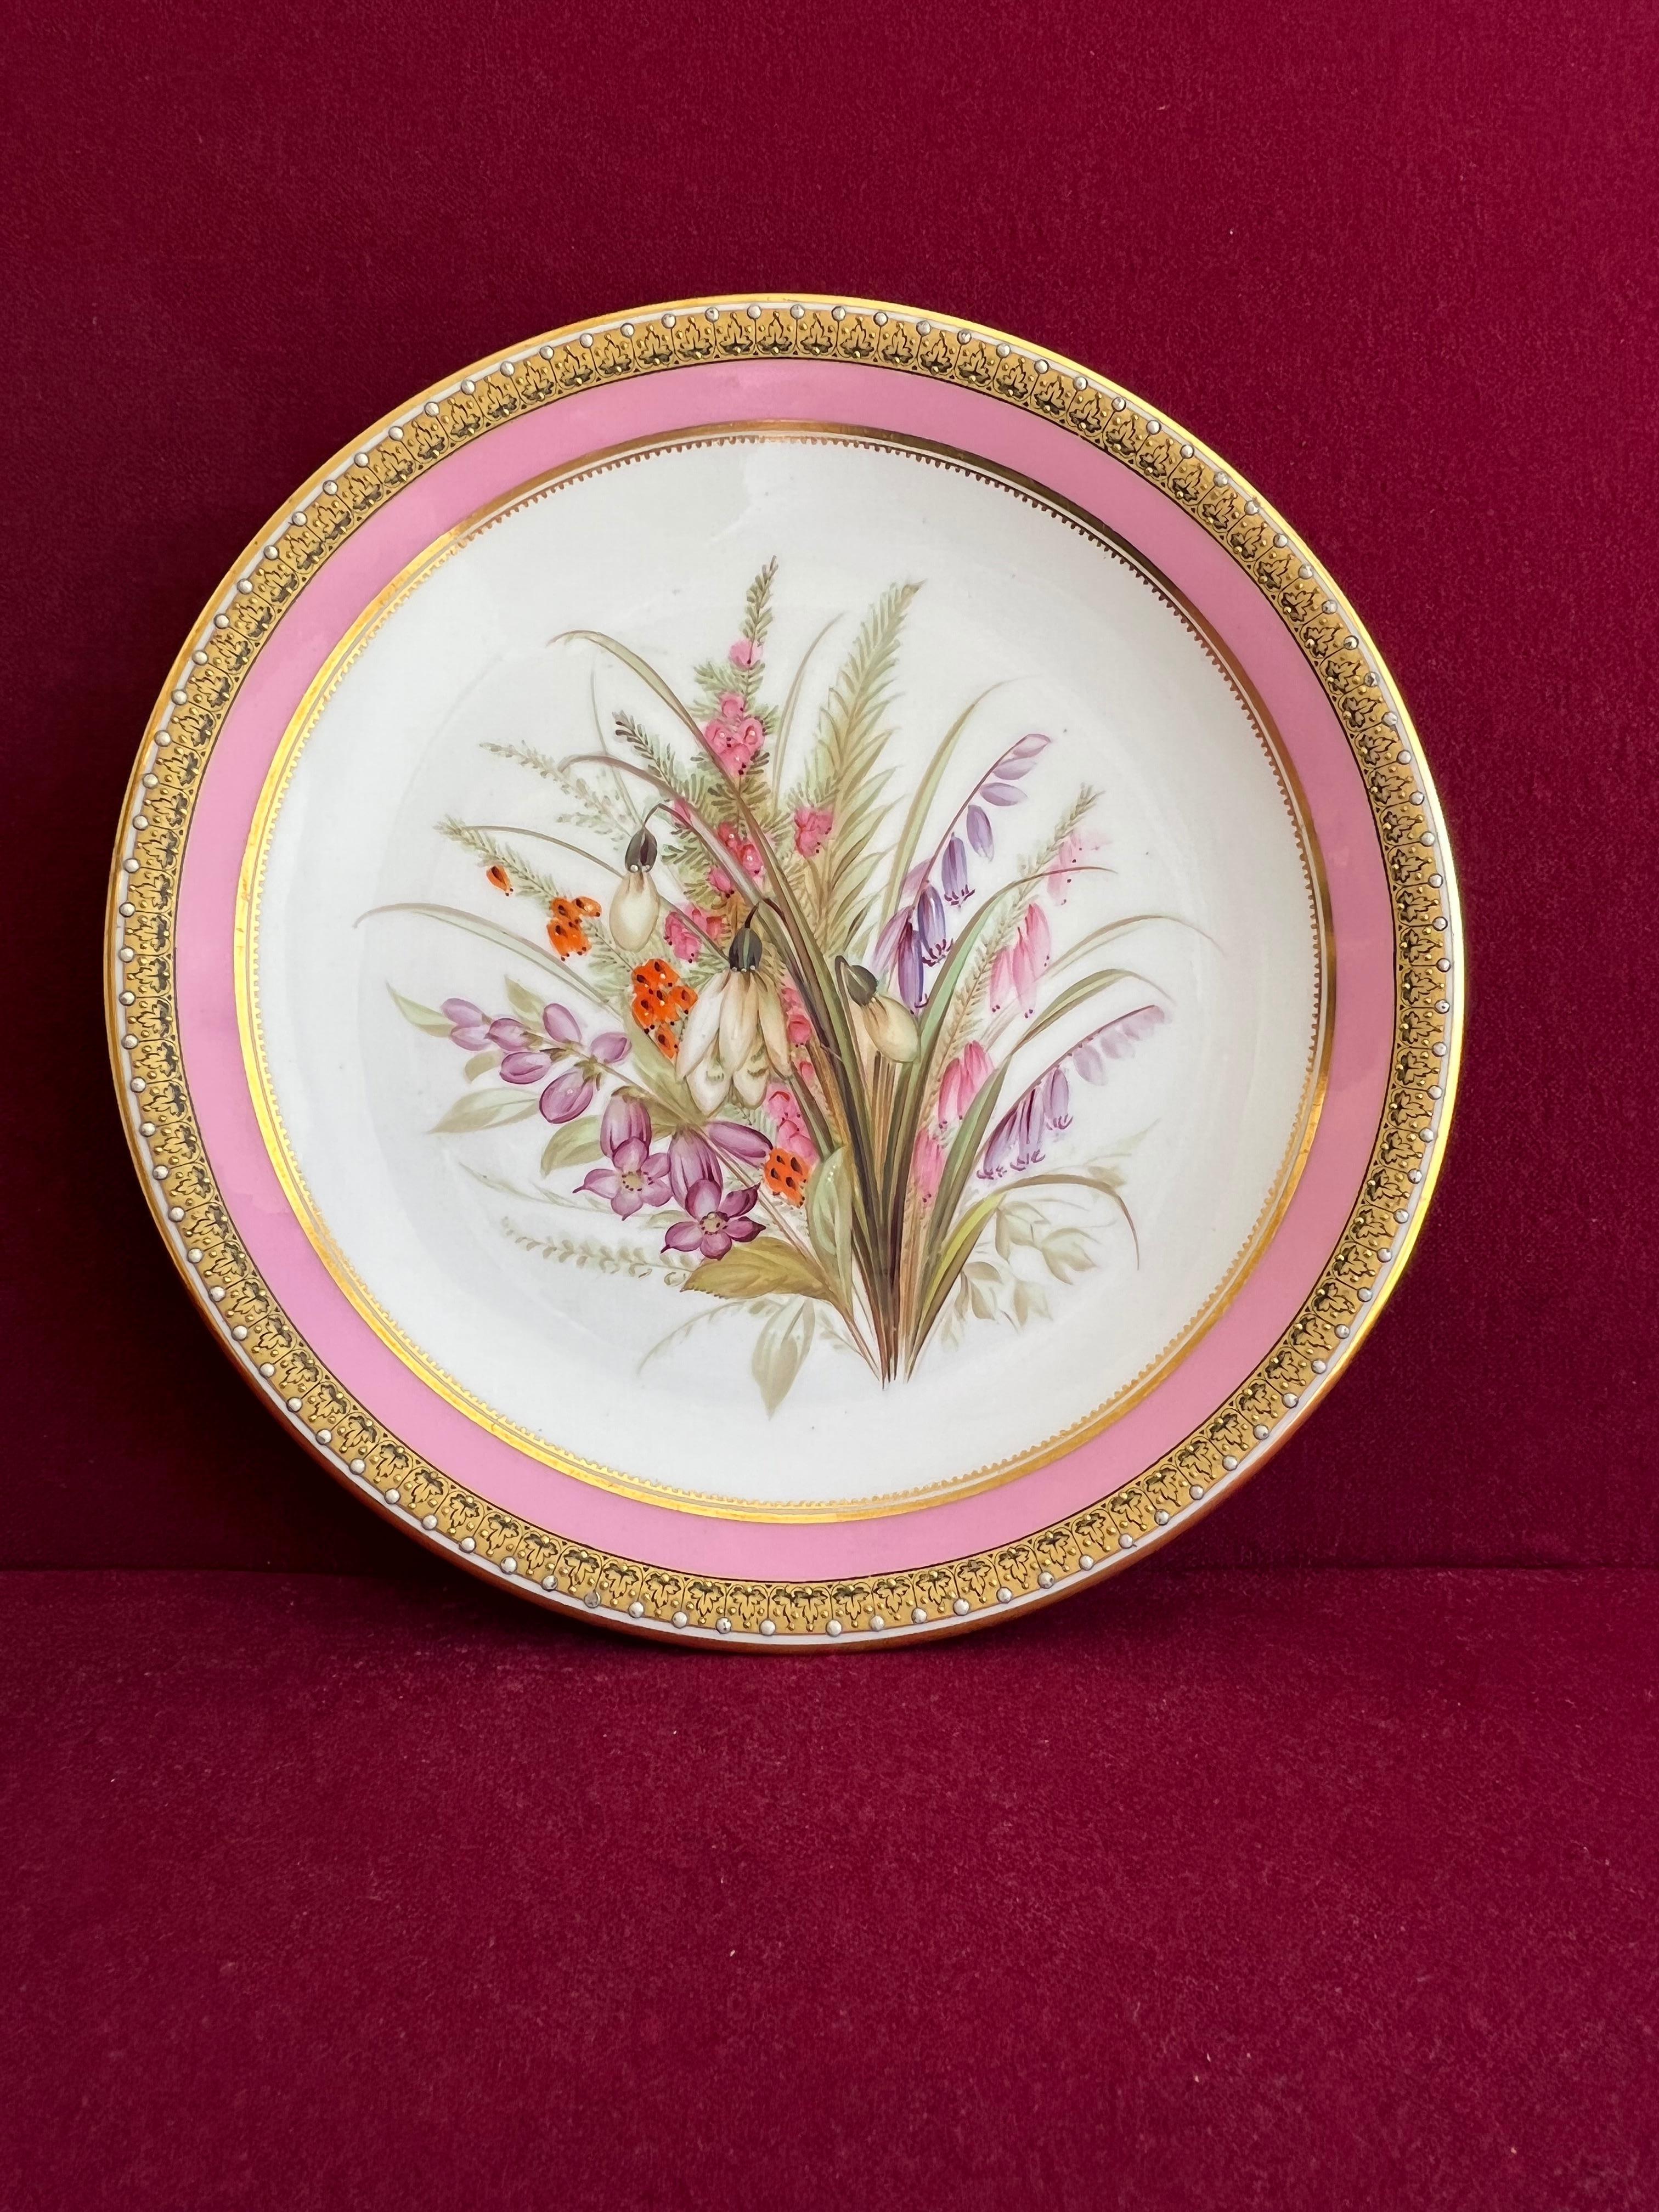 19th Century Pair of Royal Worcester Porcelain Botanical Dessert Plates c.1862-1870